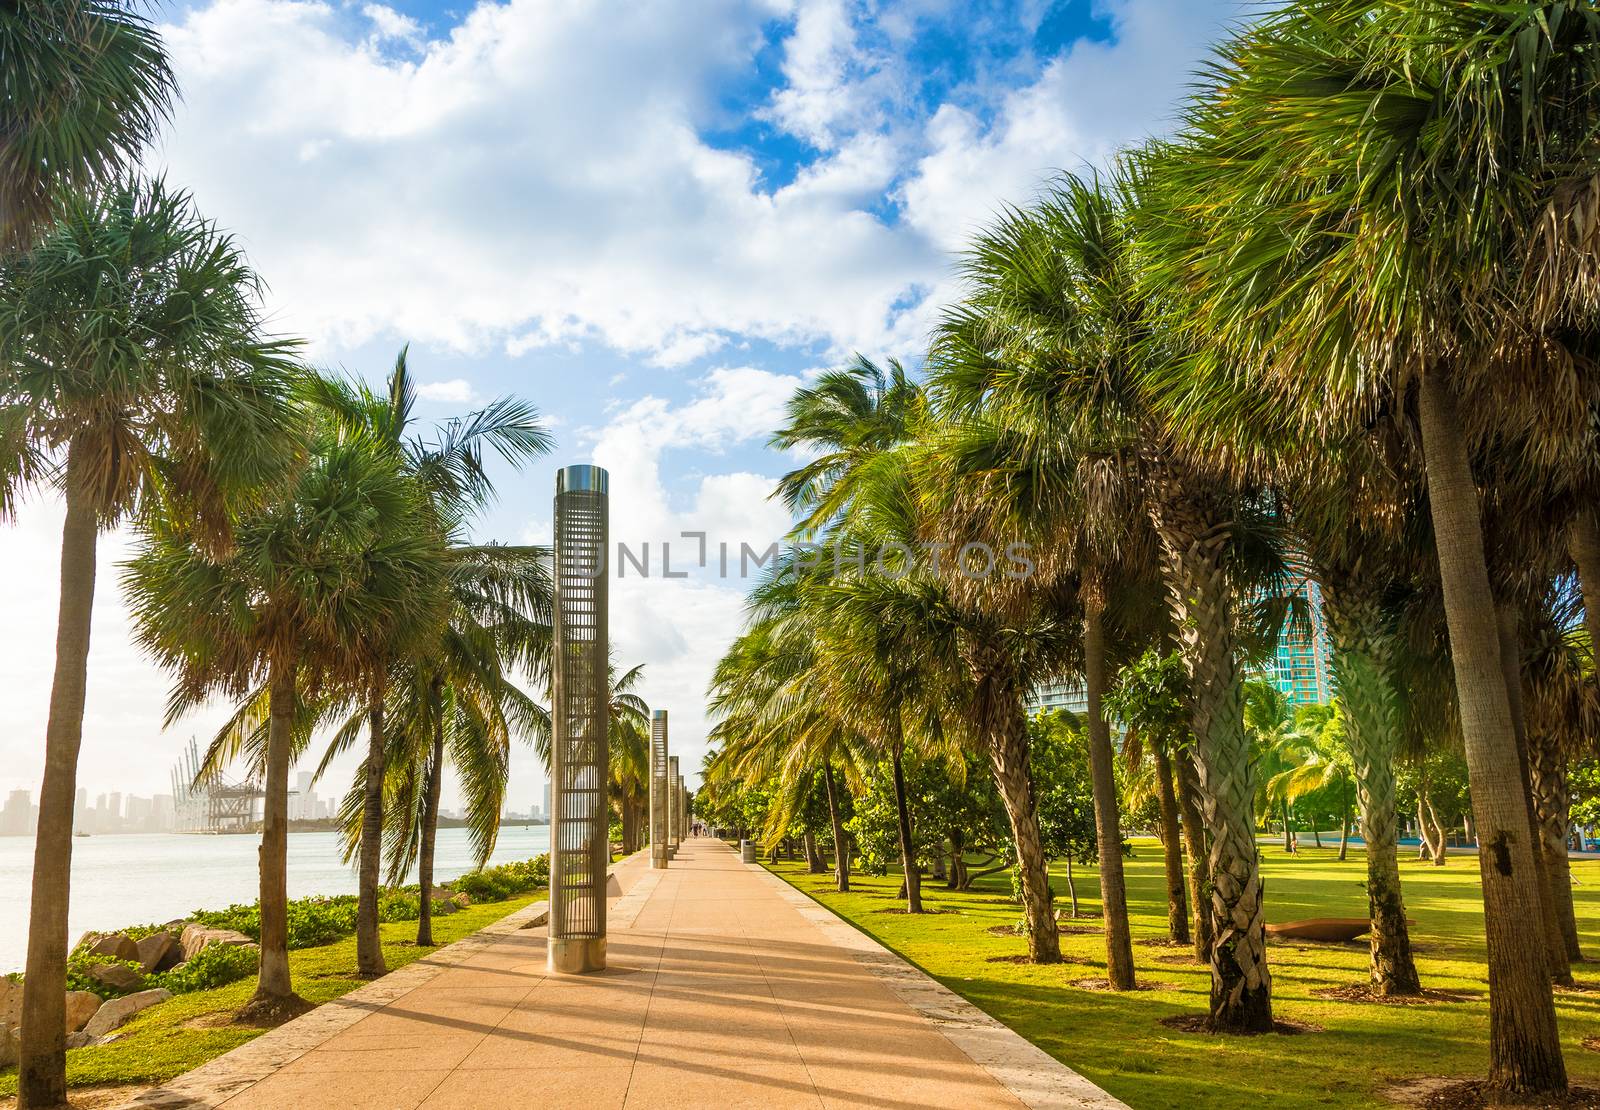 Promenade at South Pointe Park in South Beach, Miami Beach, Florida, USA.